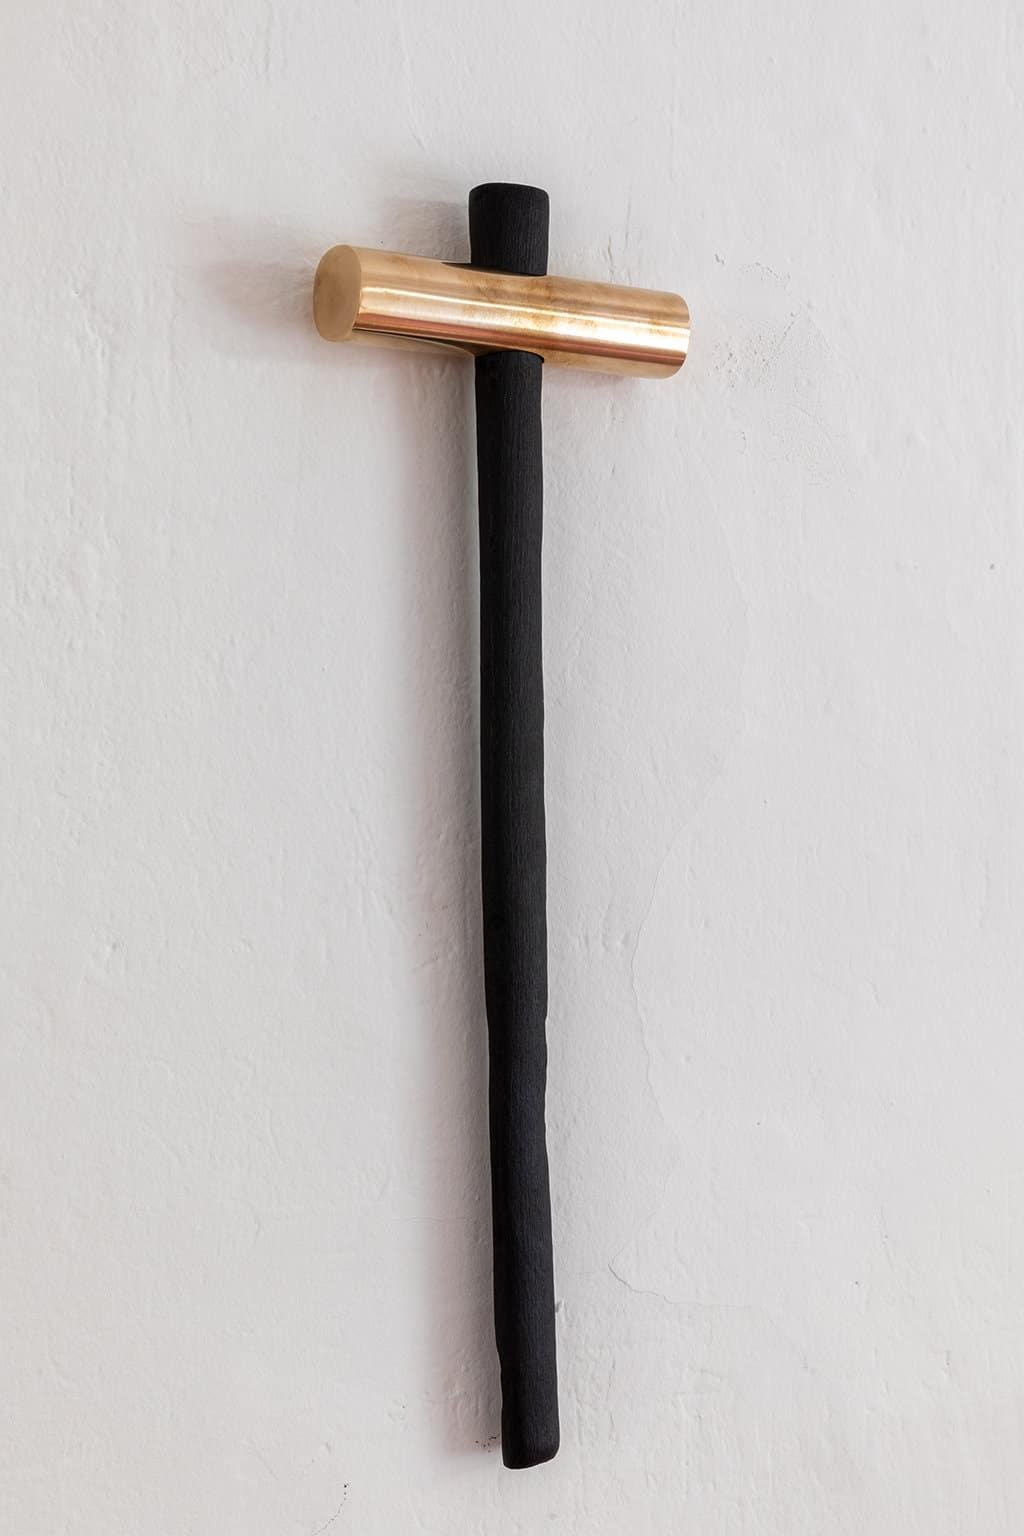 Crocemartello Cross Hammer by Secondome Edizioni and Studio F
Designer: Giulio Iacchetti.
Dimensions: D 3,5 x W 16 x H 50 cm.
Materials: Solid woodworm maple wood and bronze.

Collection / Production: Secondome + Studio F. Available in all kinds of